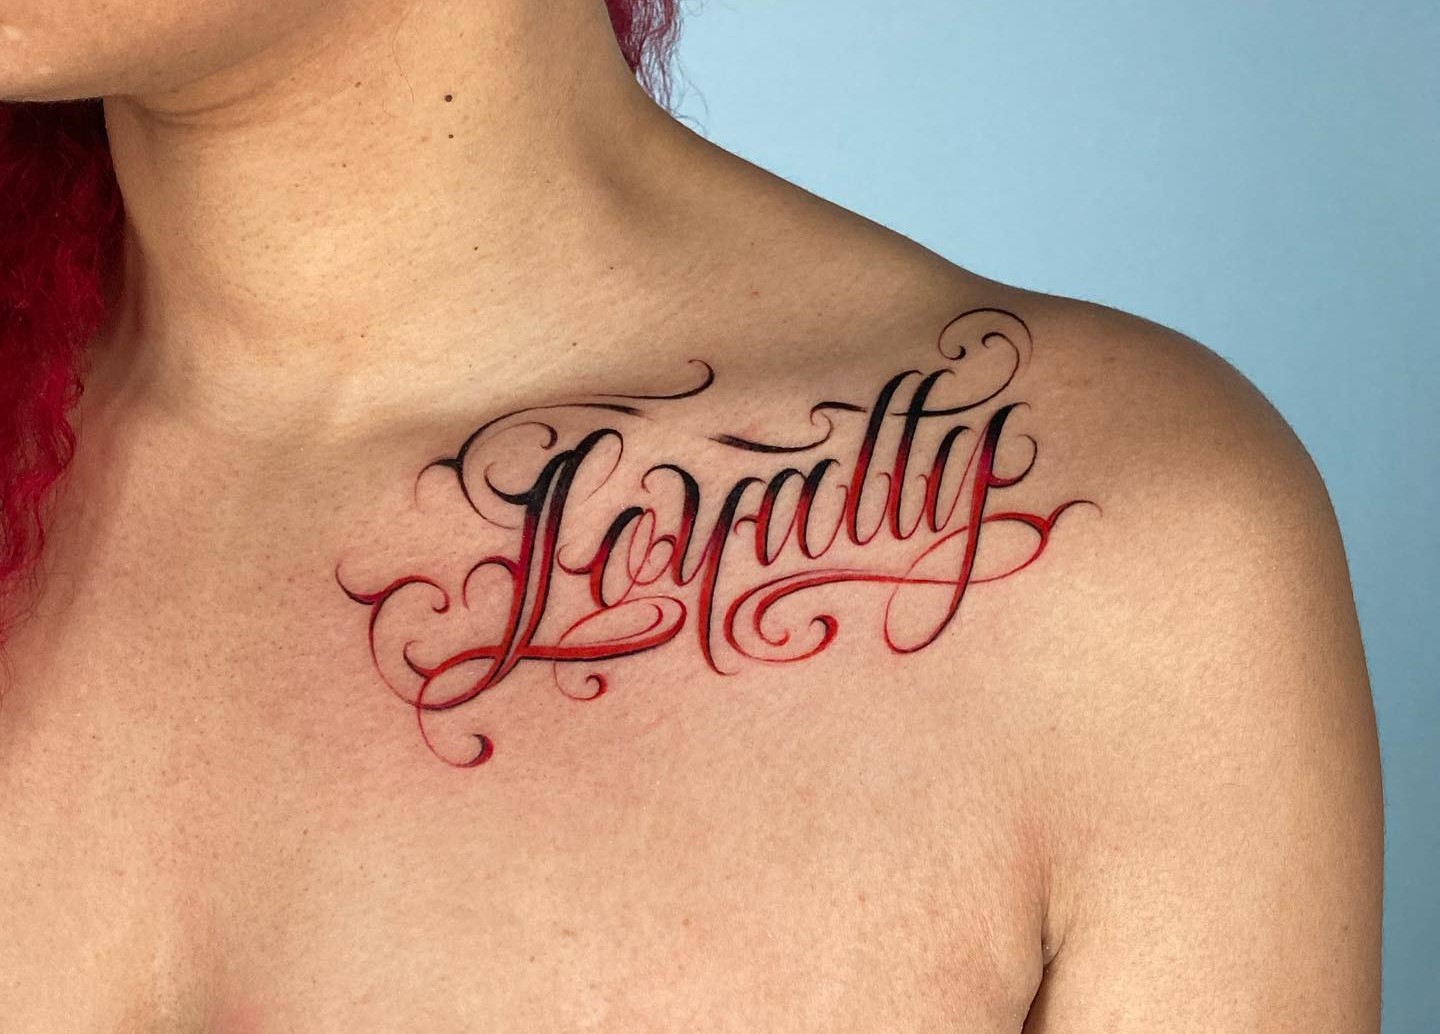 Love trust loyalty  Loyalty tattoo Celtic tattoos Meaningful tattoos